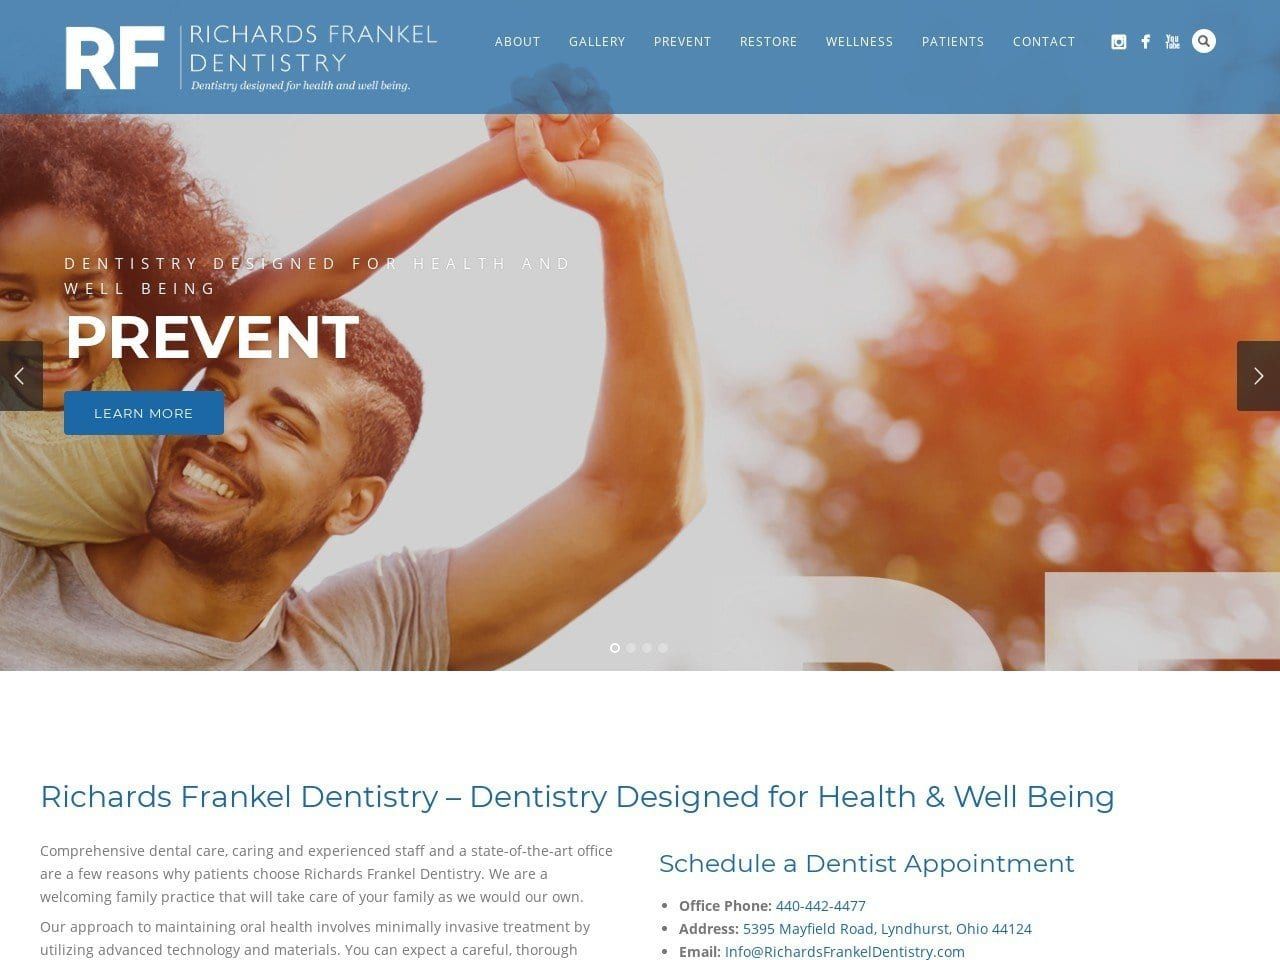 Richards Frankel Dentist Website Screenshot from richardsfrankeldentistry.com